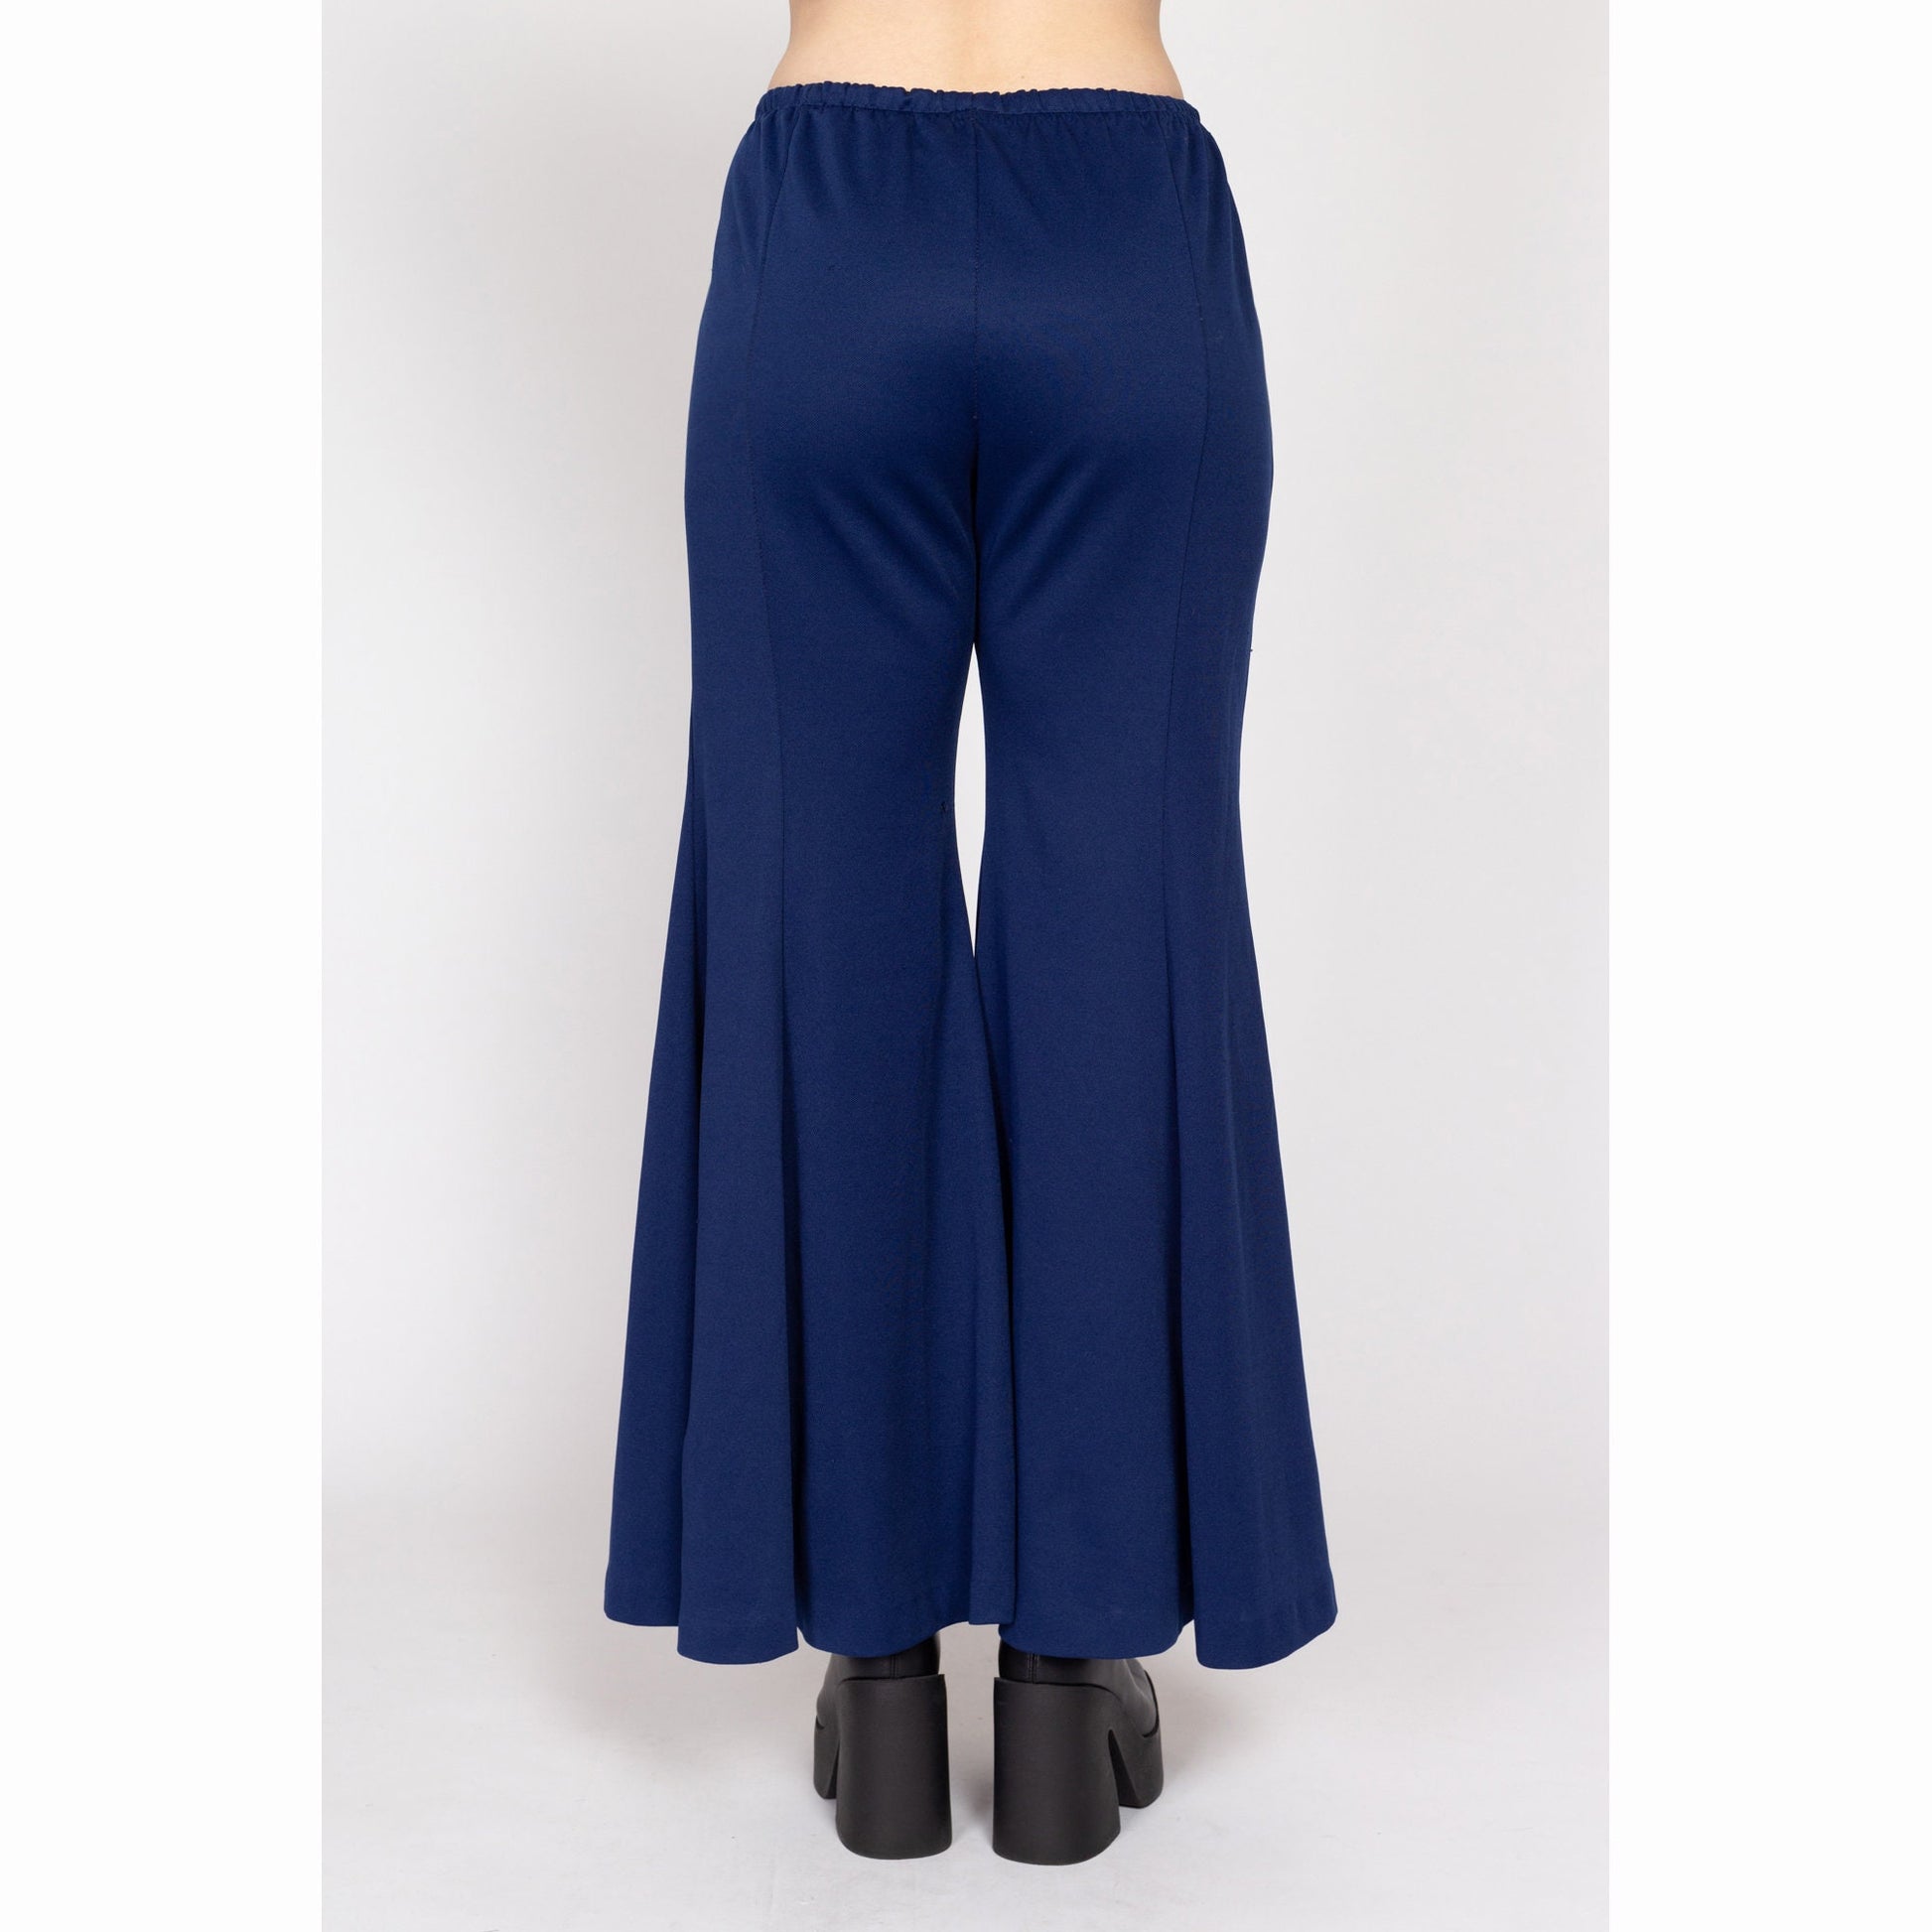 Medium 70s Navy Blue Bell Bottom Pants | Vintage High Waisted Retro Flared Elastic Disco Loungewear Trousers